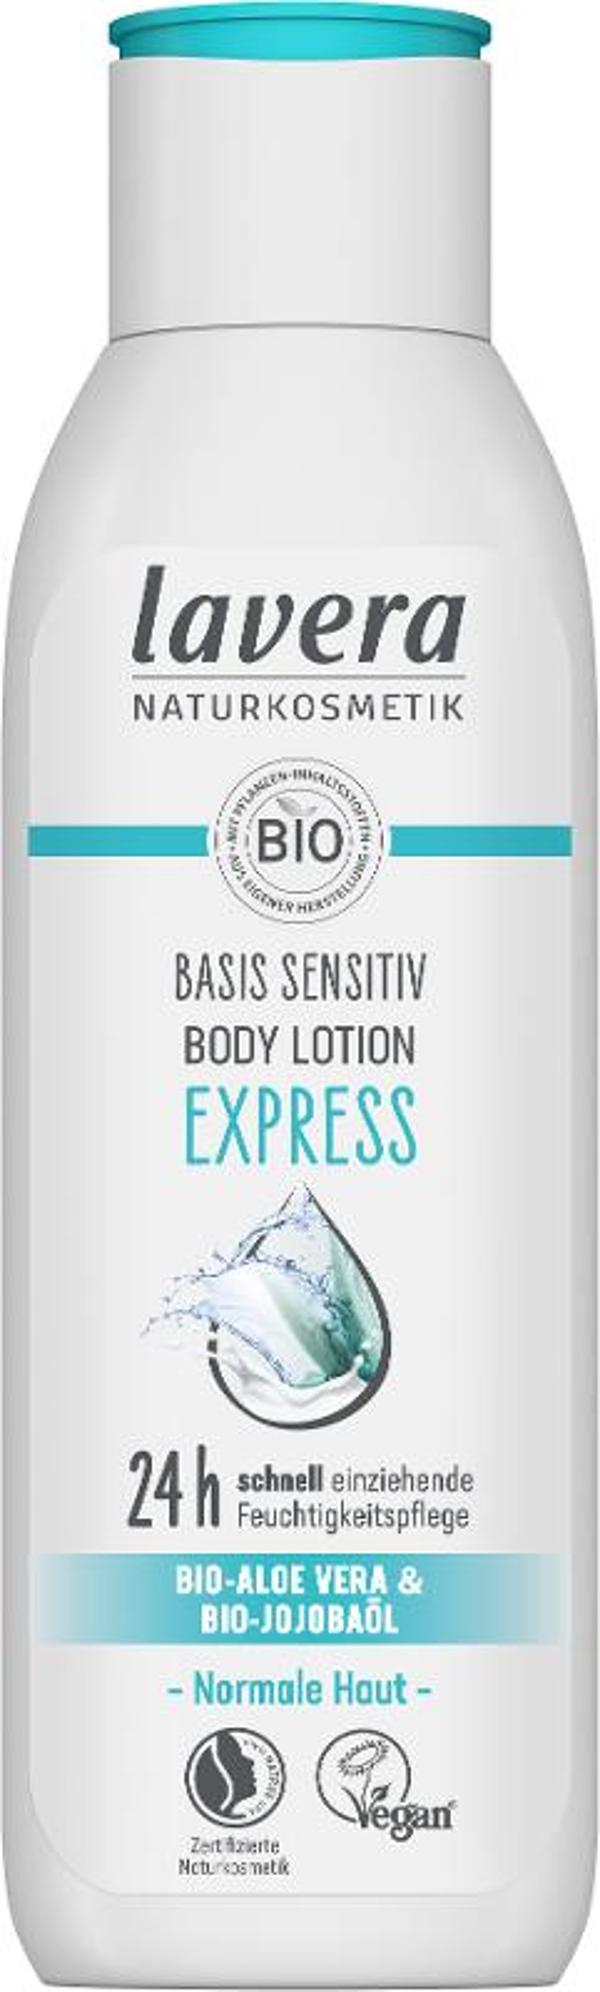 Produktfoto zu Basis Sensitiv Bodylotion Express